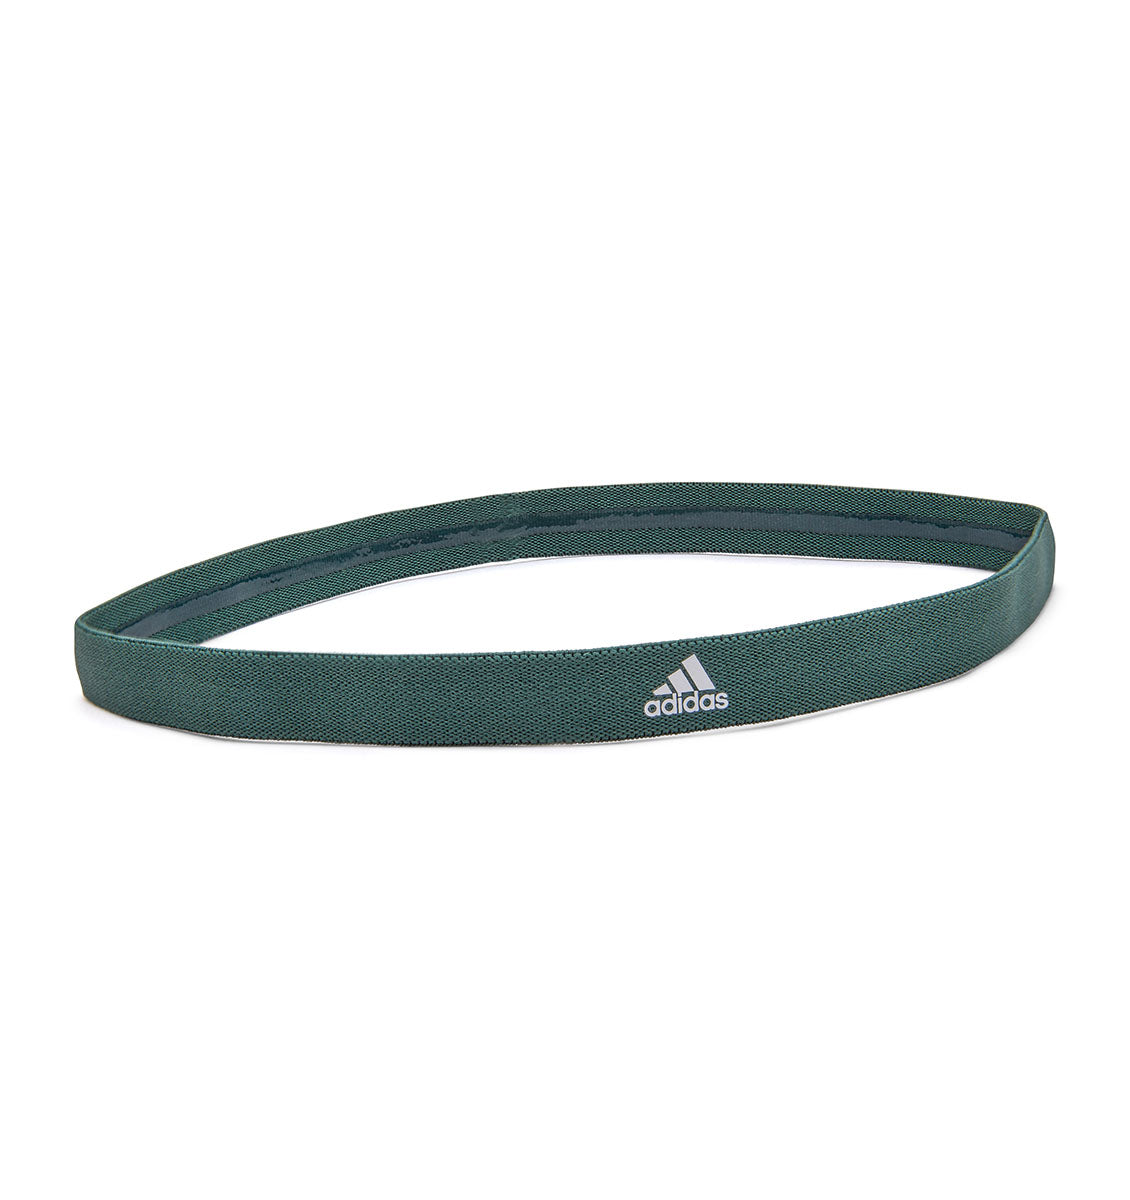 adidas Sports Hair Bands - Grey/Green/Mint (3 Pack) - 3